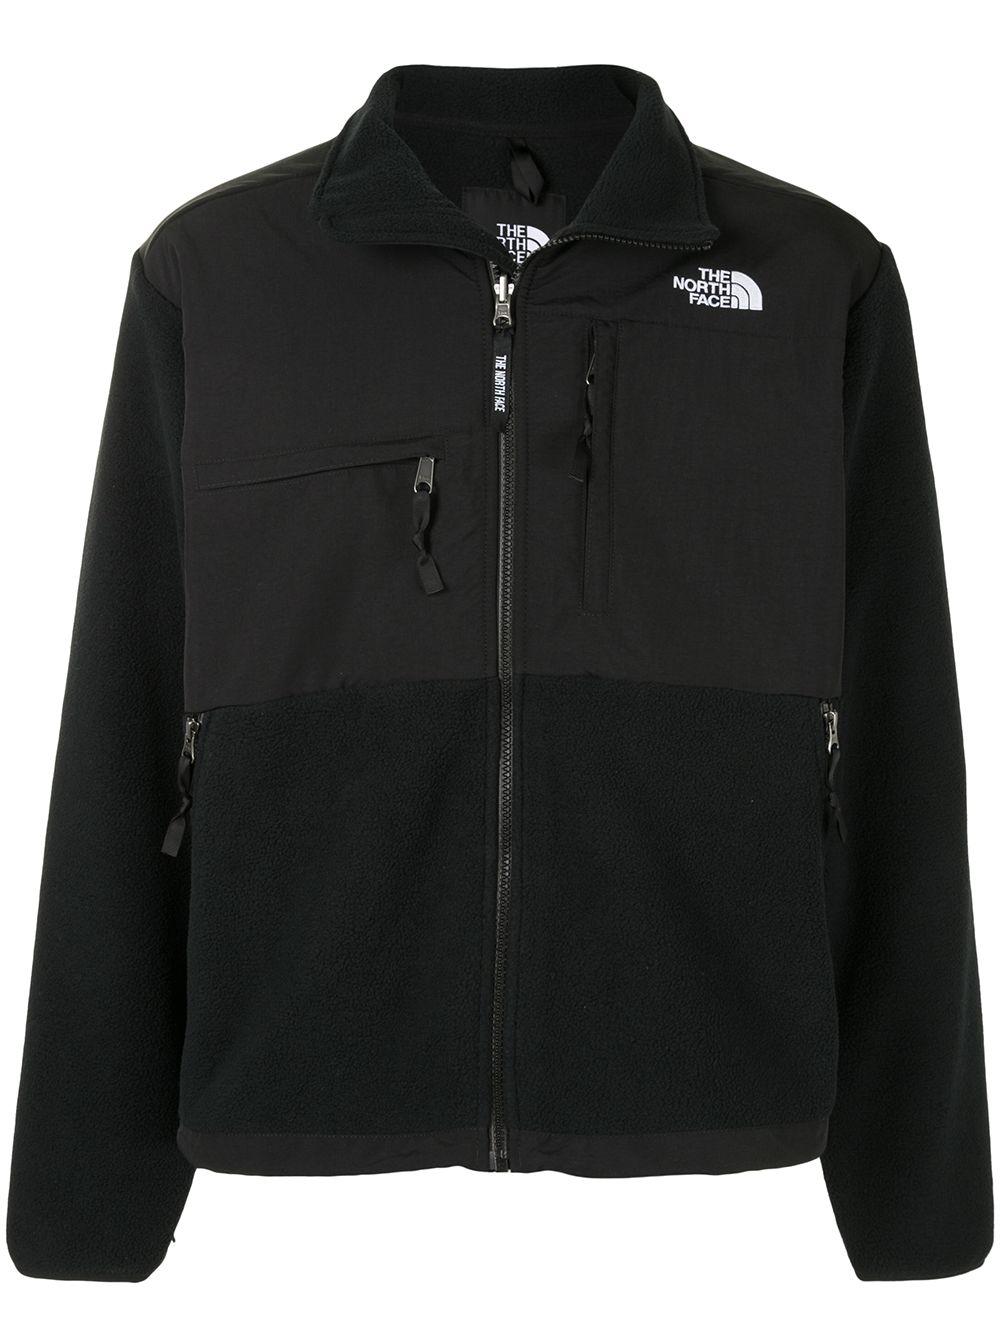 The North Face Synthetic 95 Retro Denali Jacket in Black/Black 